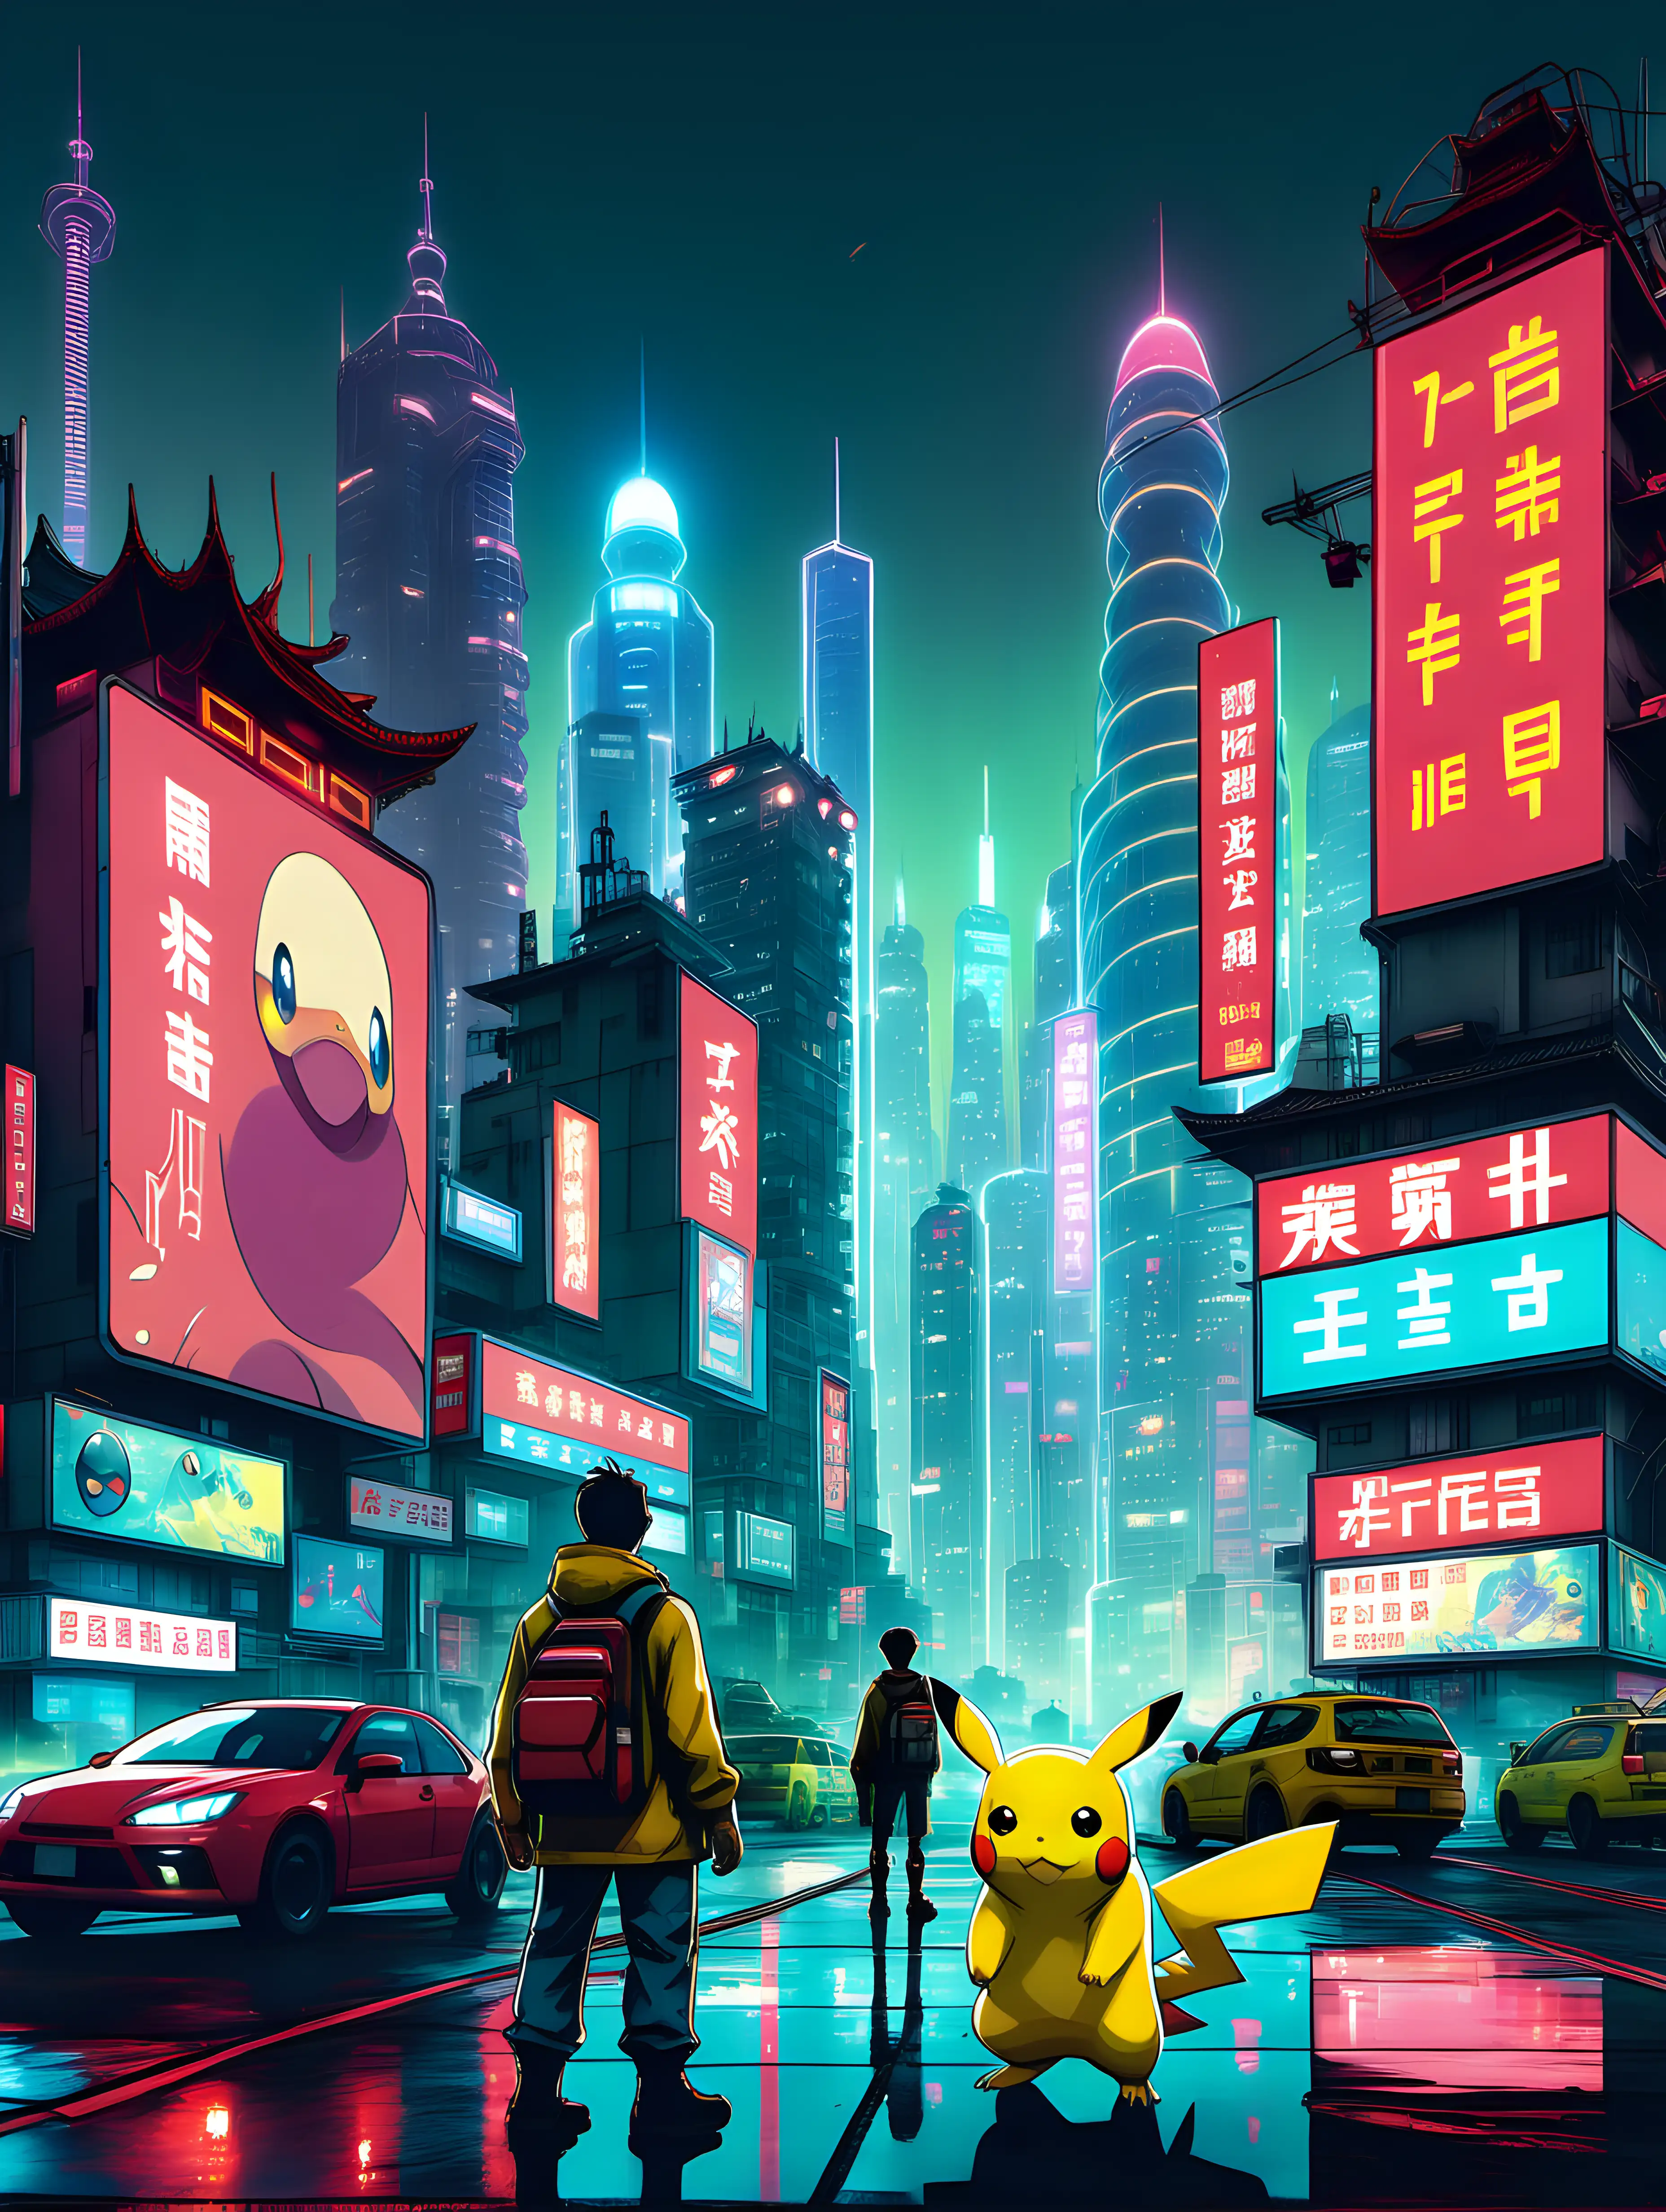 Futuristic Cyberpunk Pokemon Cityscape with Chinese Holographic Ads